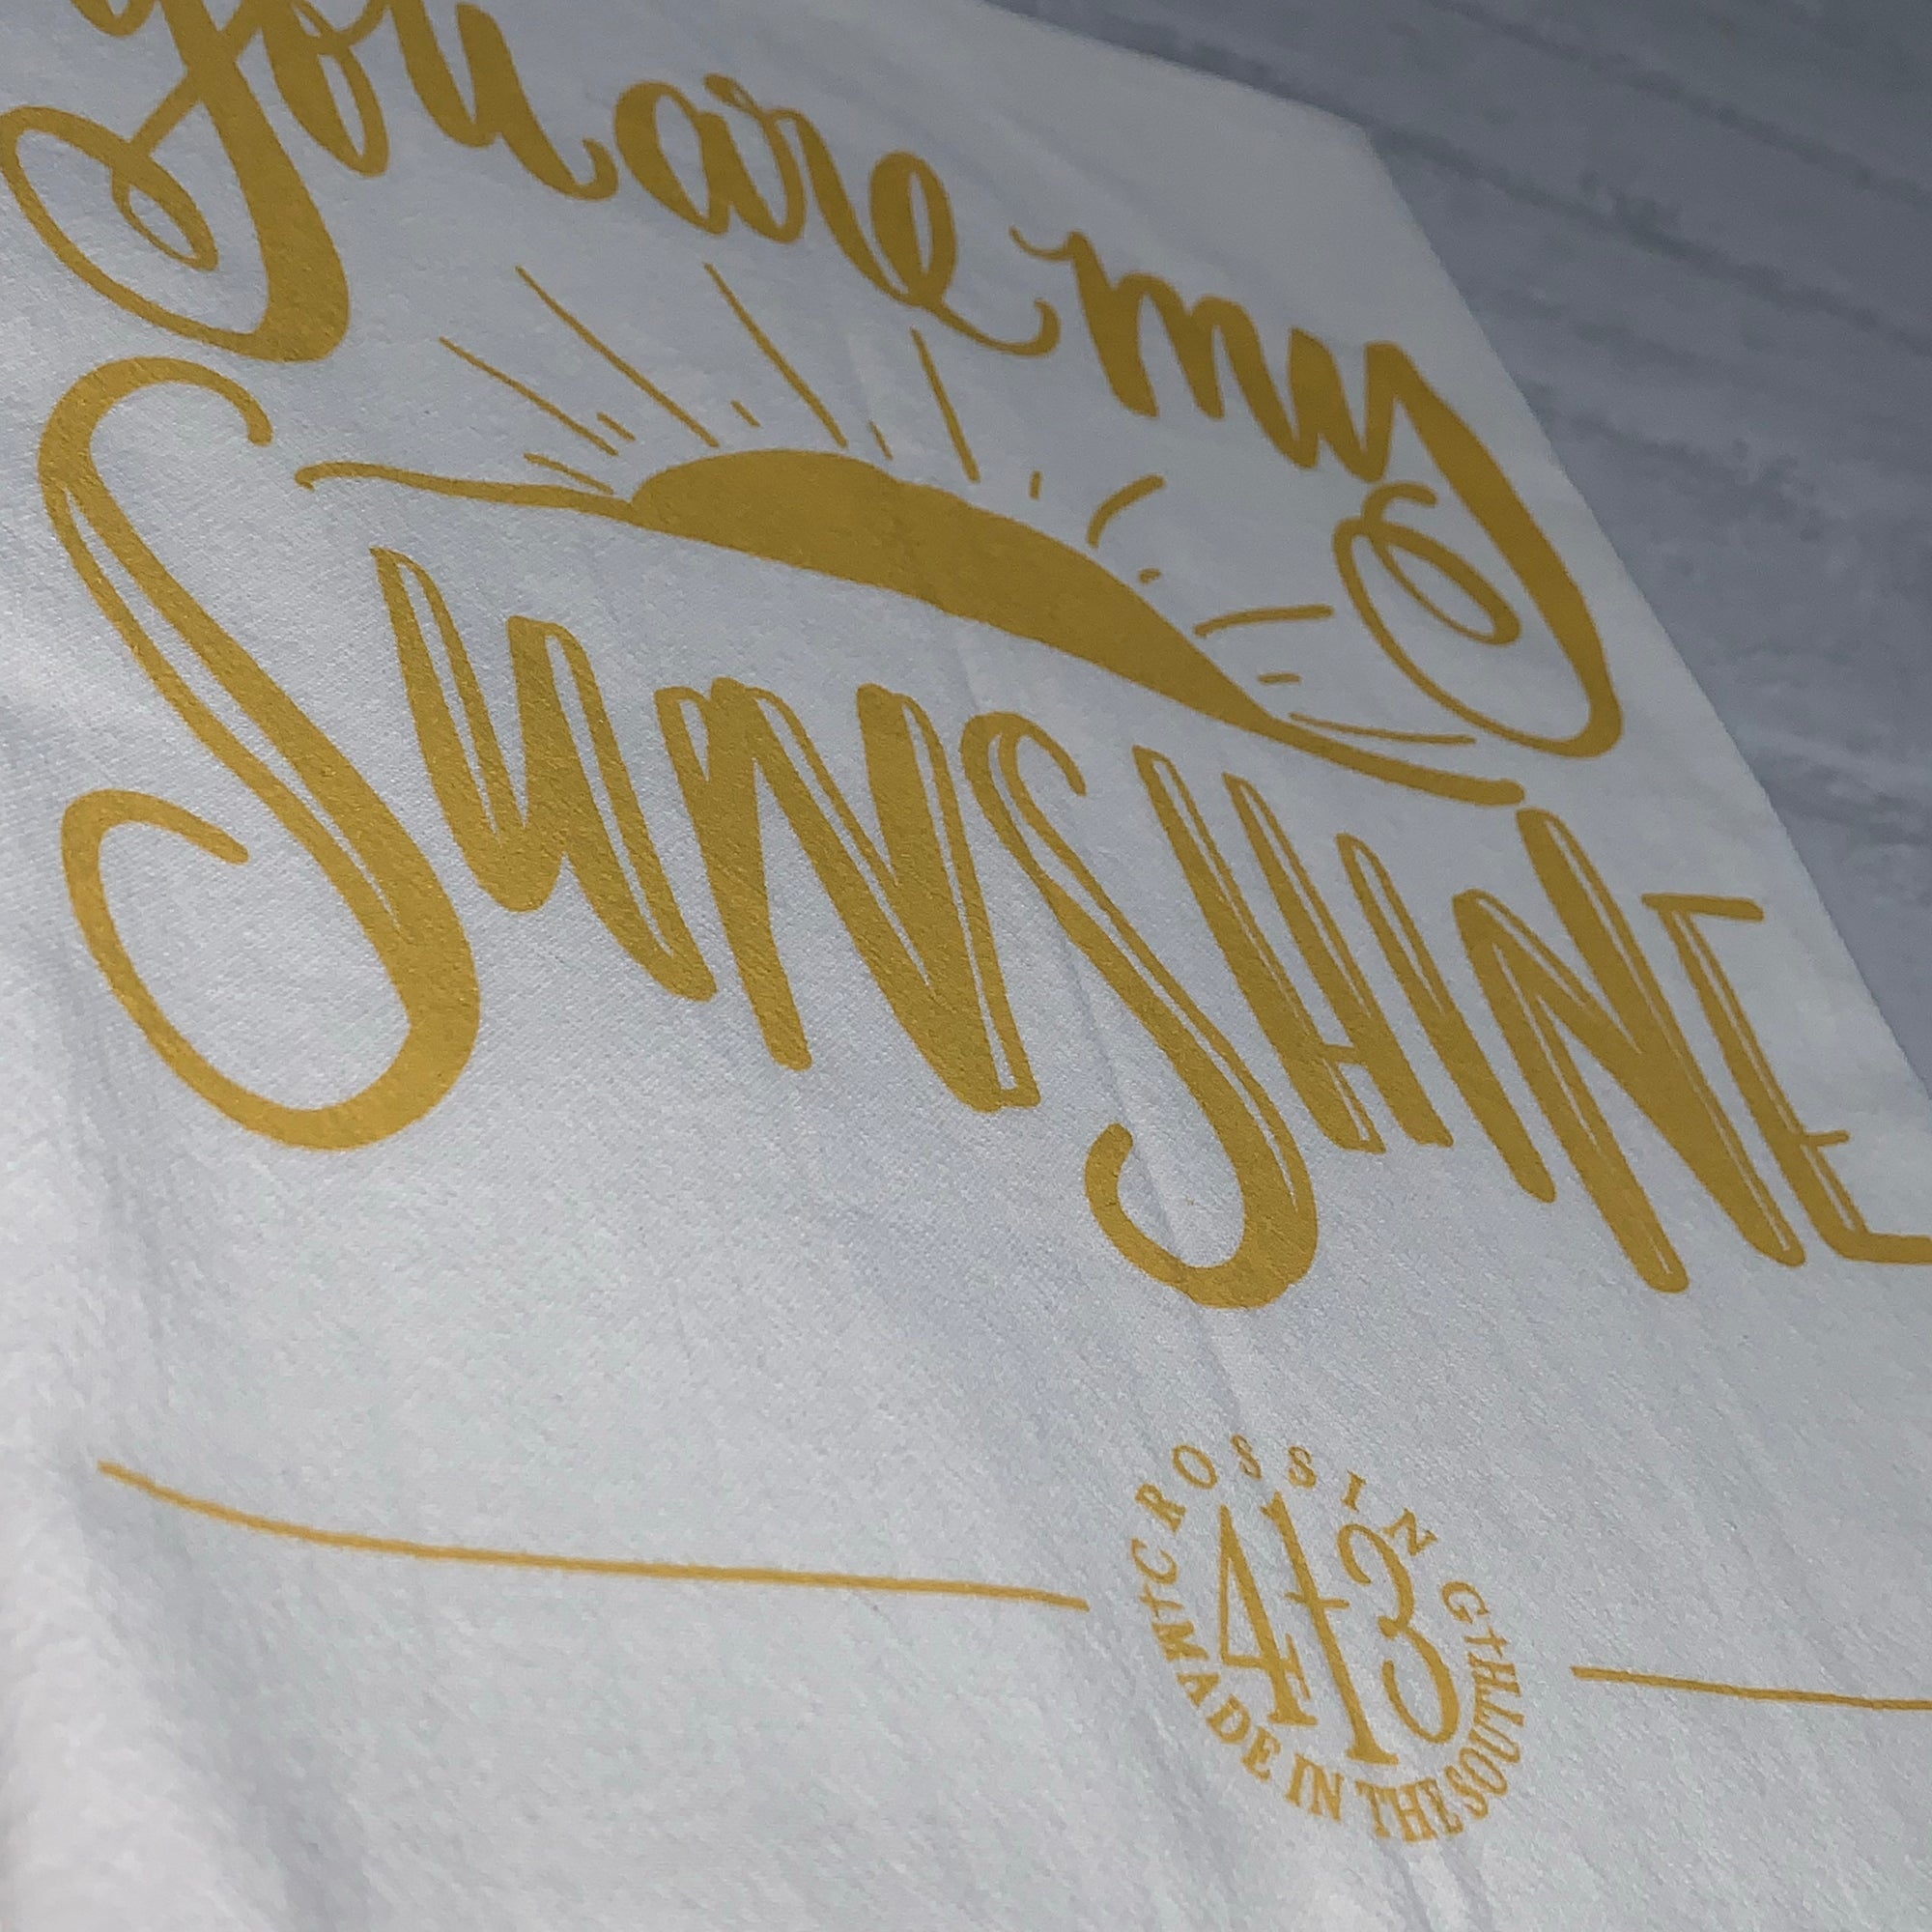 "You are my Sunshine" Flour Sack Tea Towel